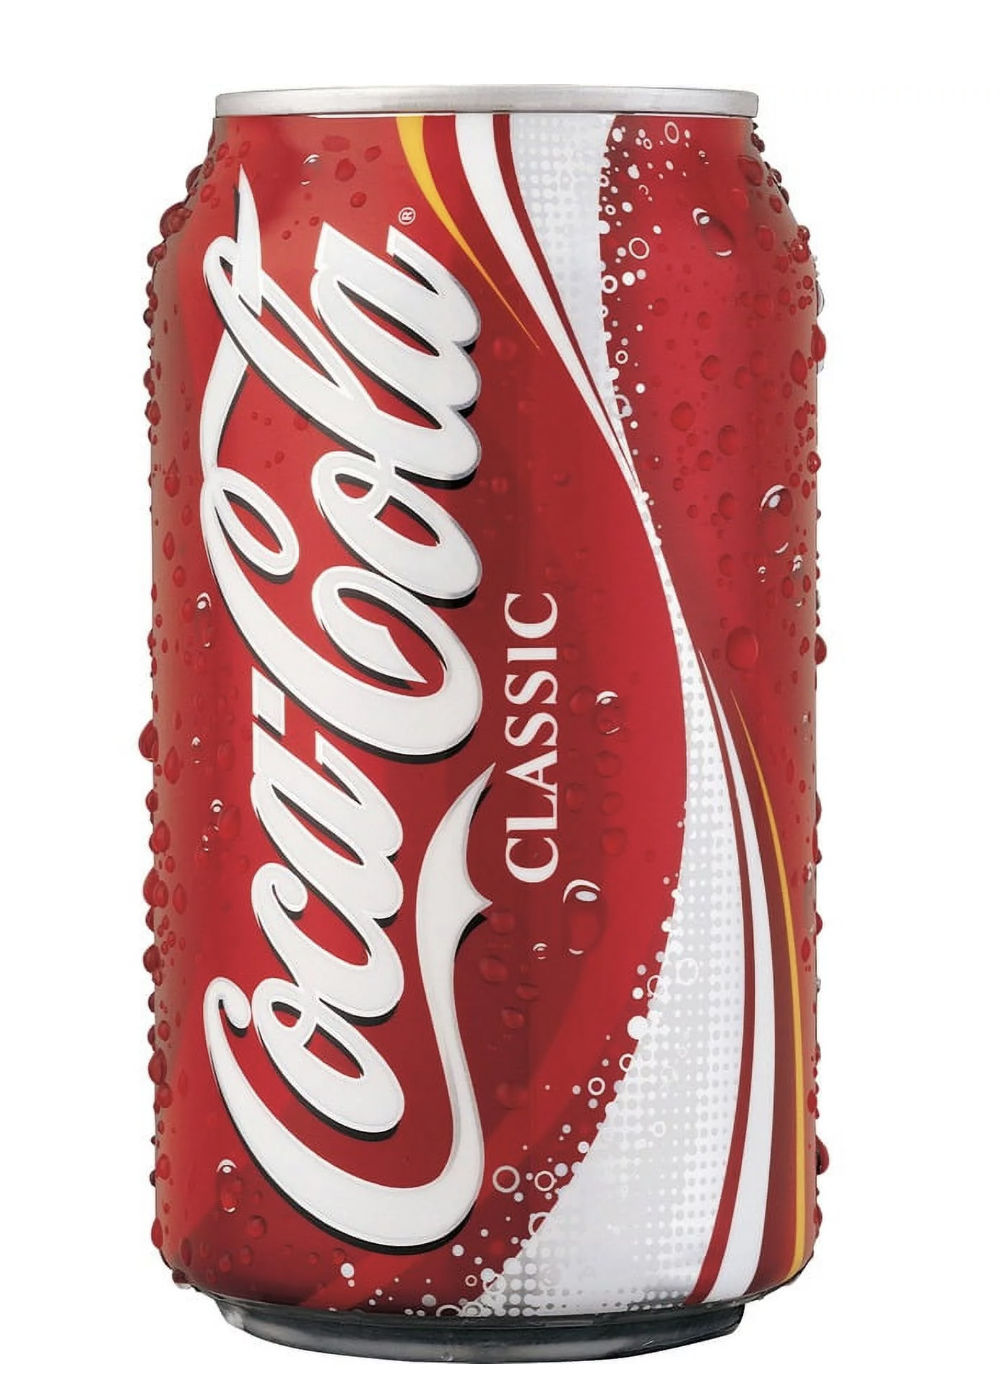 可樂 Coke